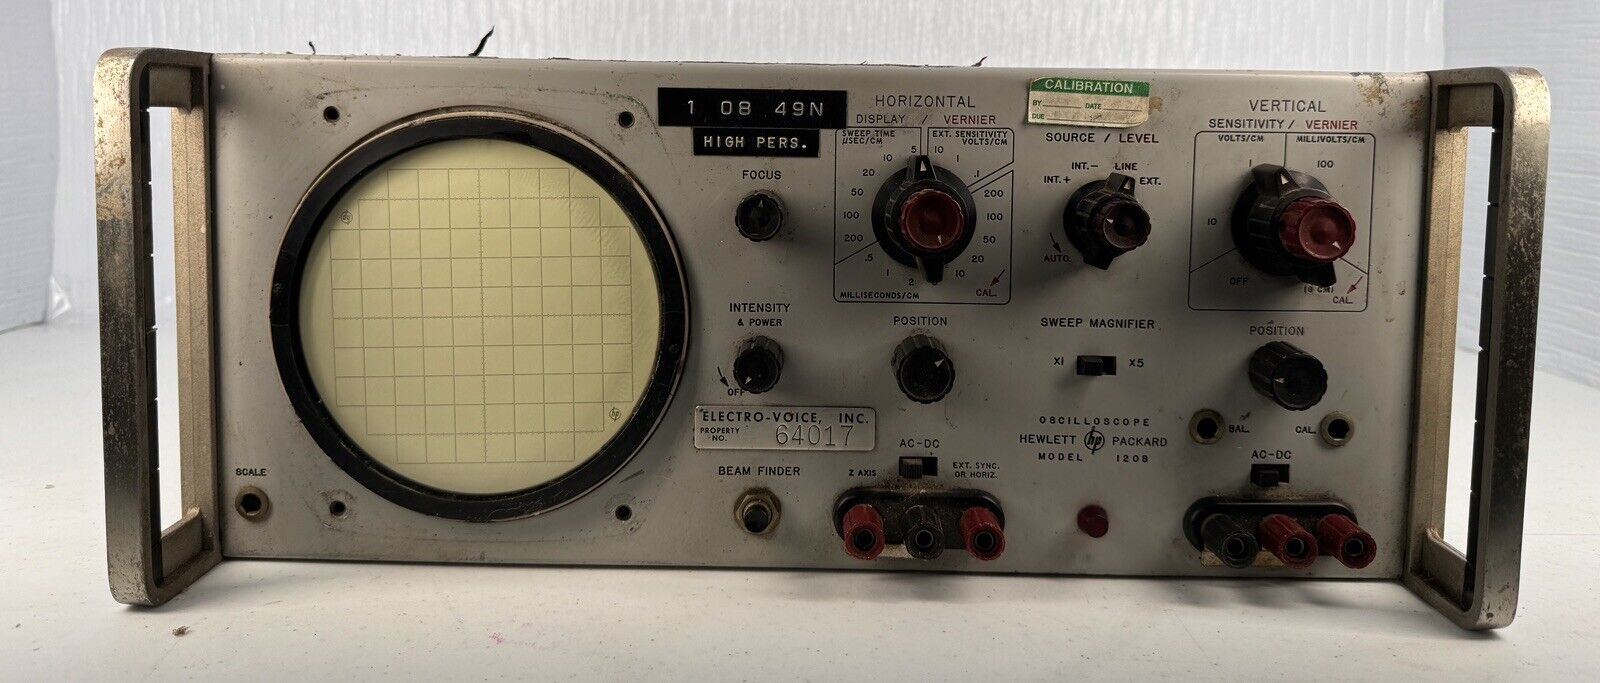 Hewlett Packard Oscilloscope Model 120B Parts Only Vintage Tube READ